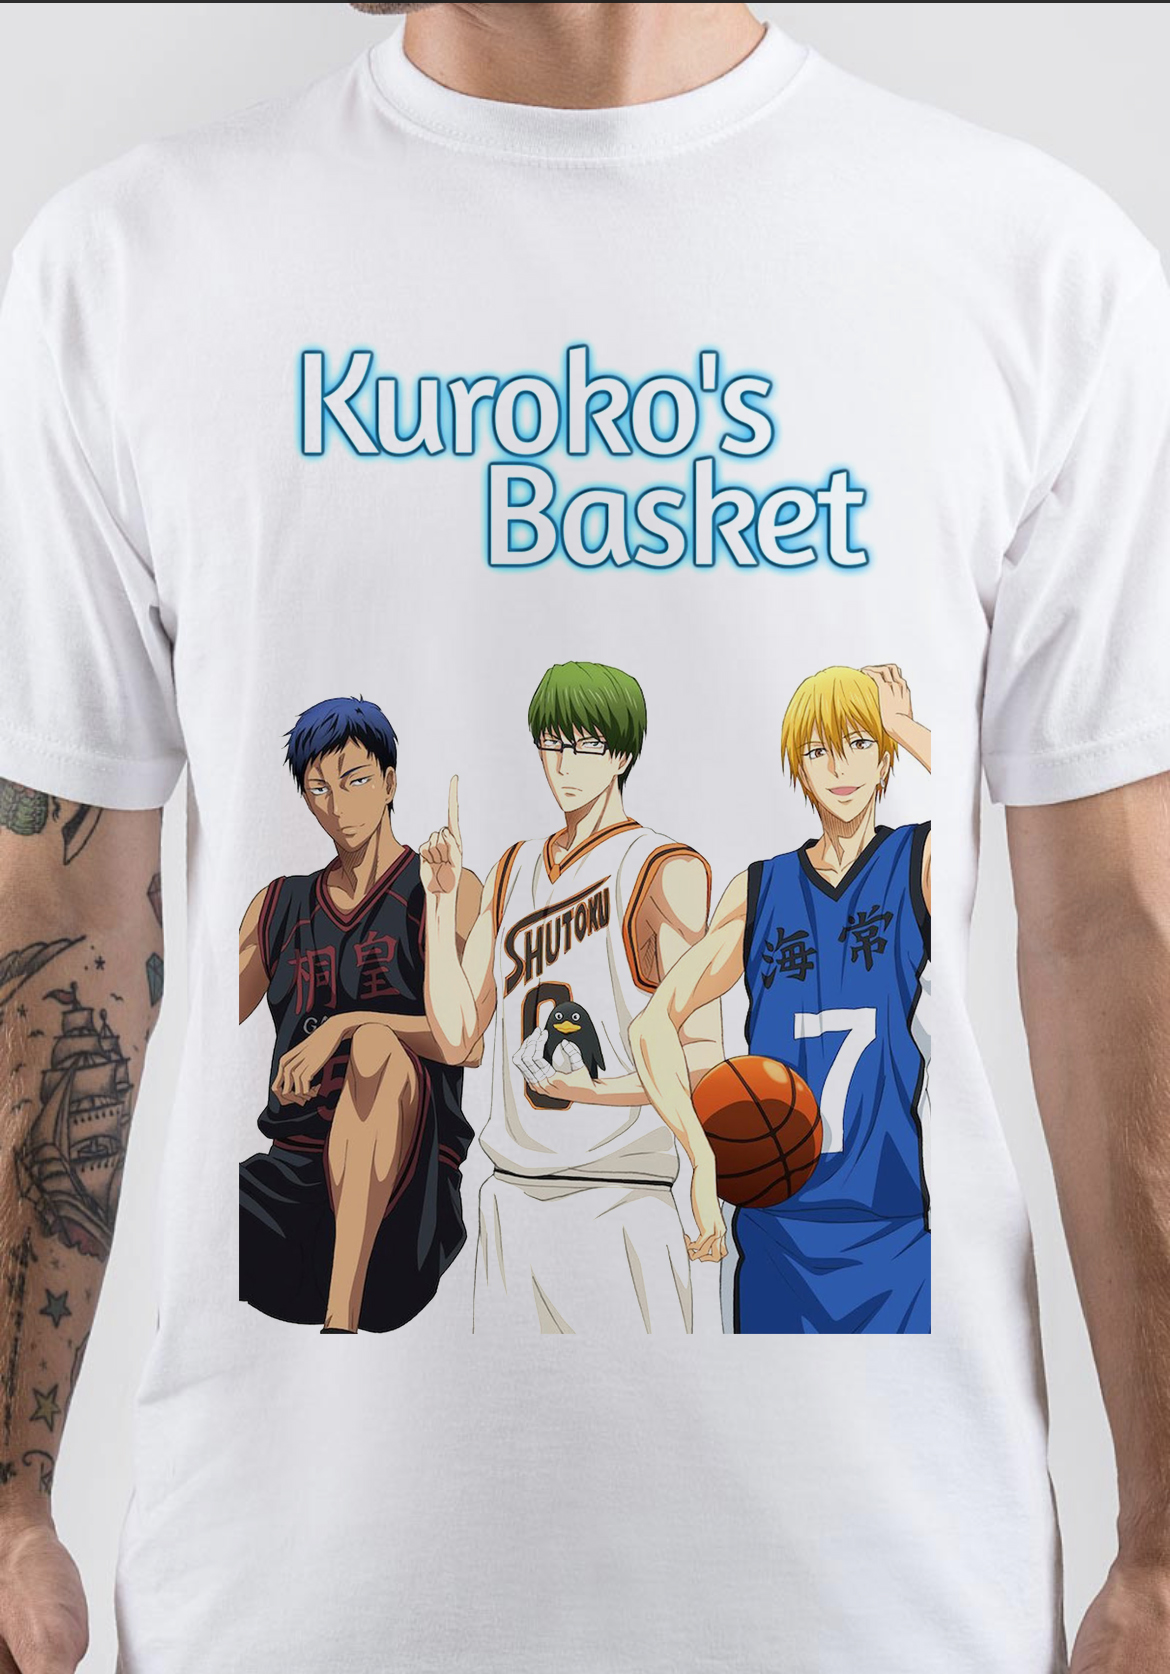 Kuroko's Basketball T-Shirt And Merchandise